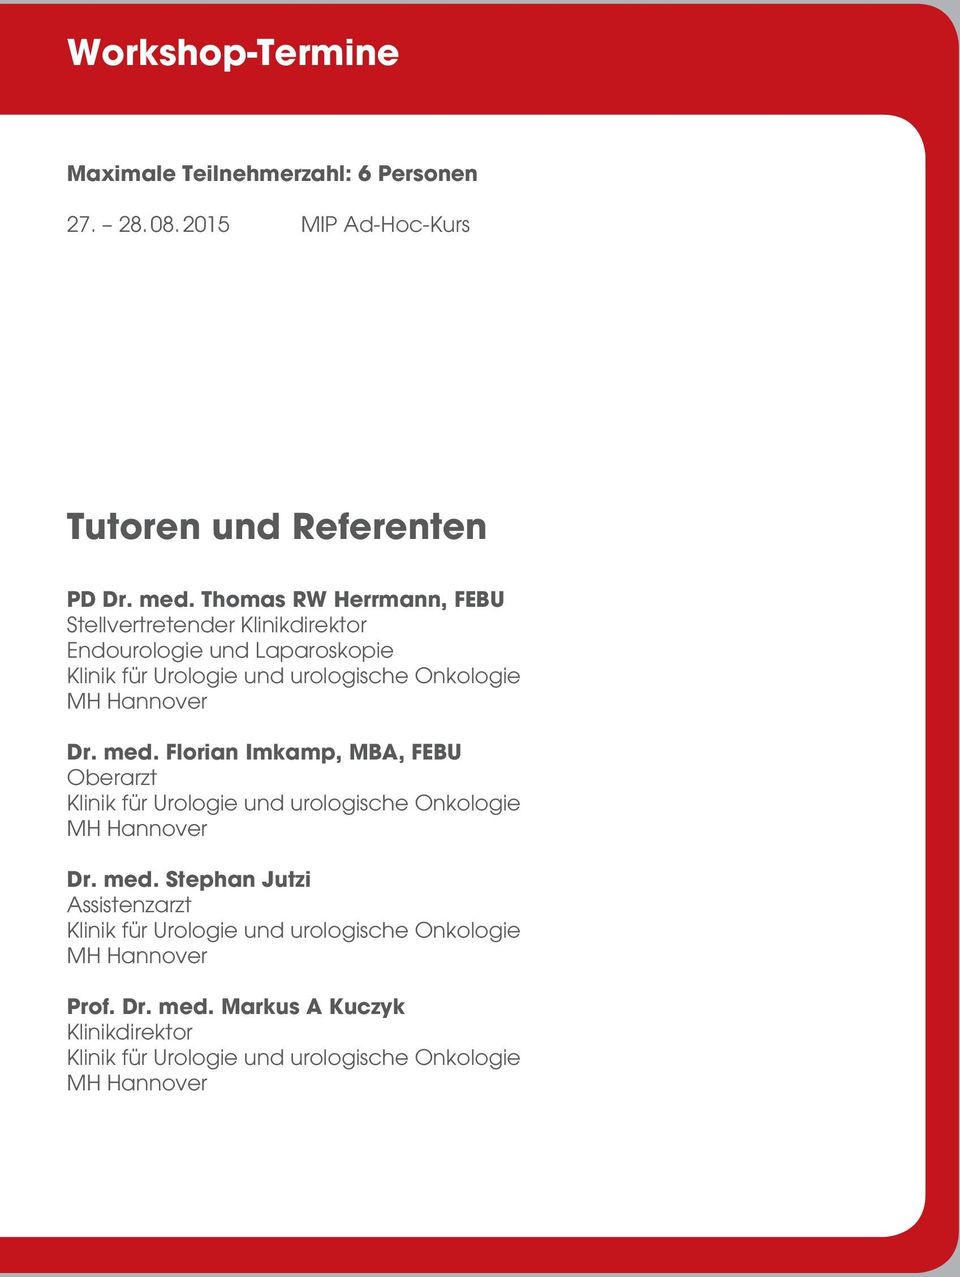 Thomas RW Herrmann, FEBU Stellvertretender Klinikdirektor Endourologie und Laparoskopie MH